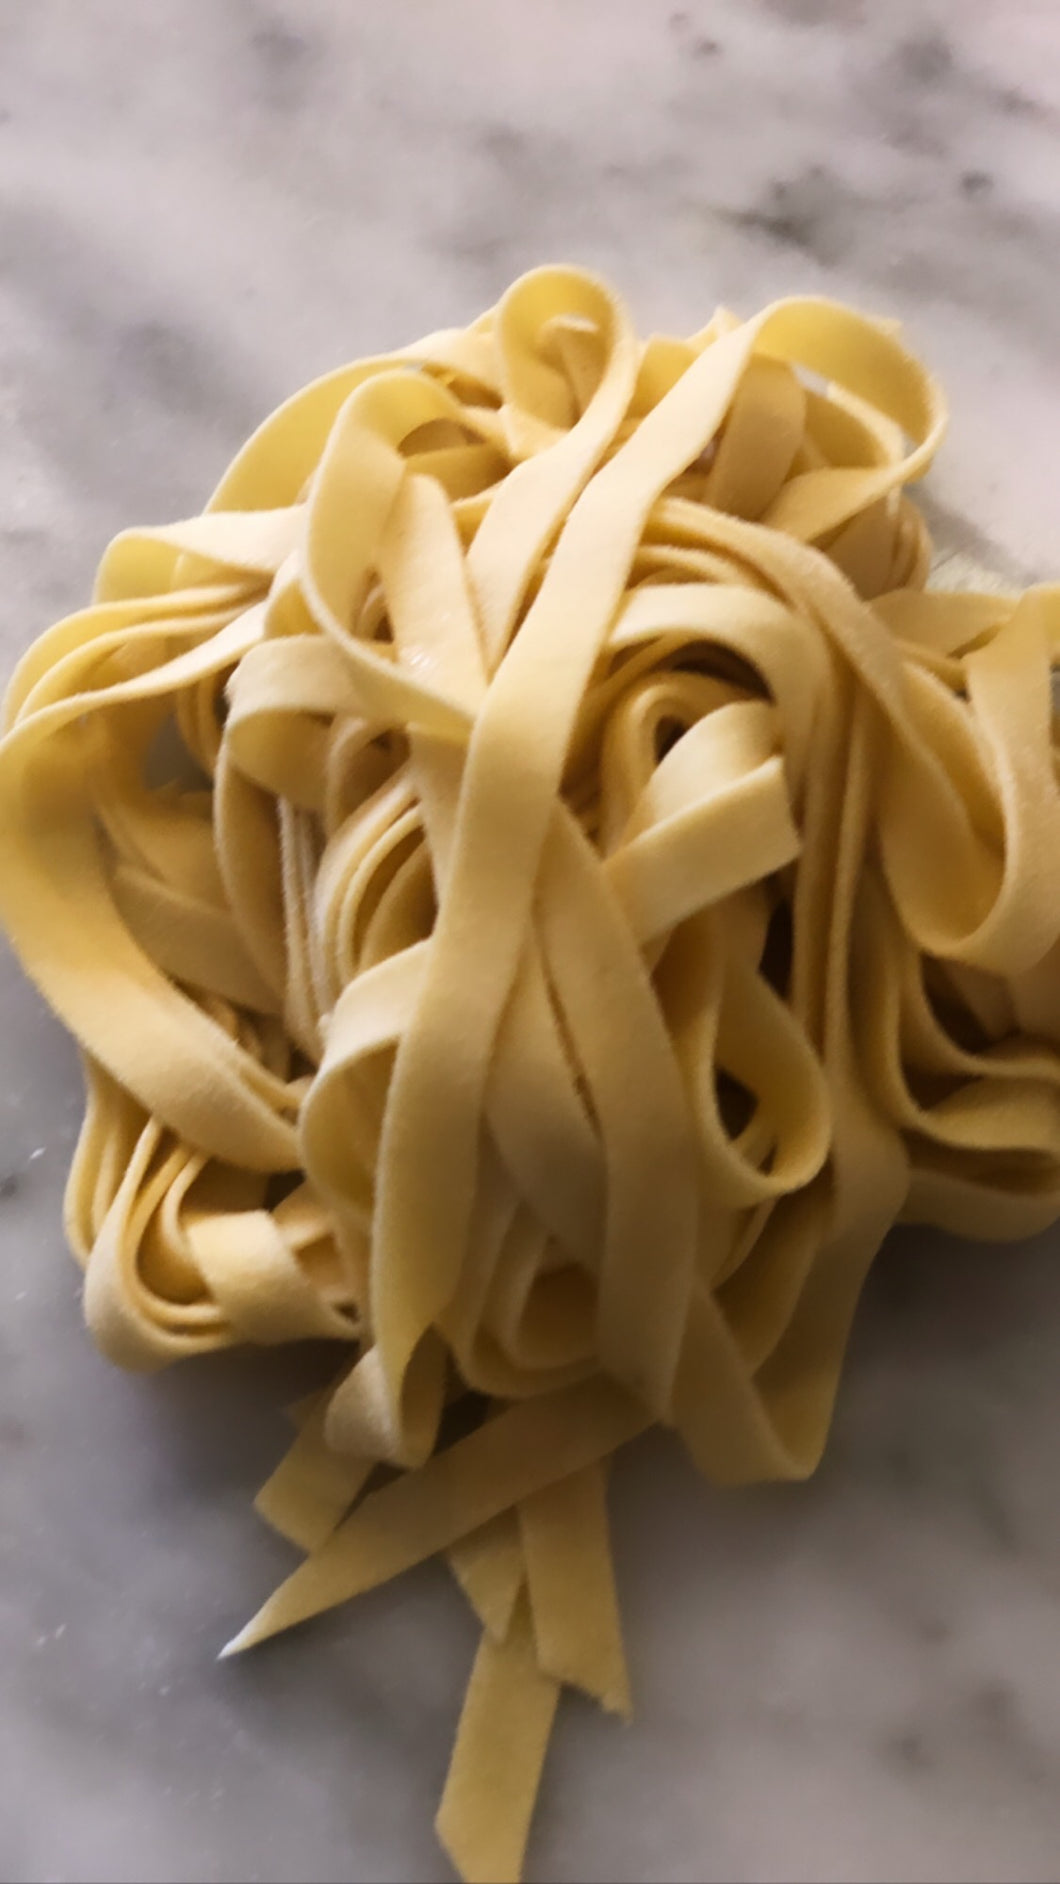 Pasta- Ravioli & Fettuccine